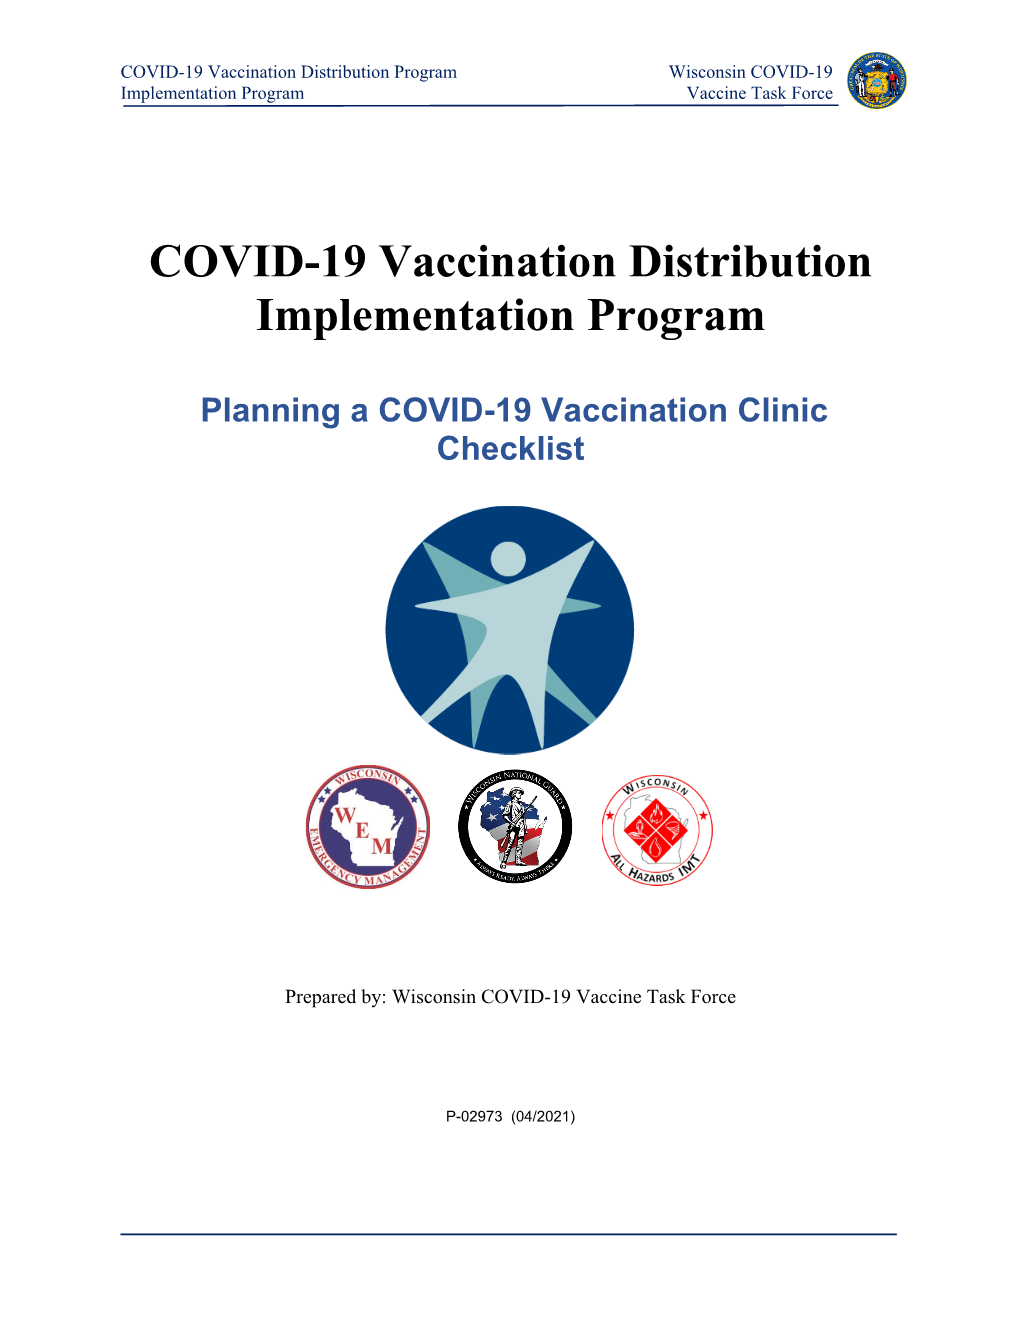 Planning a COVID-19 Vaccination Clinic Checklist, P-02973